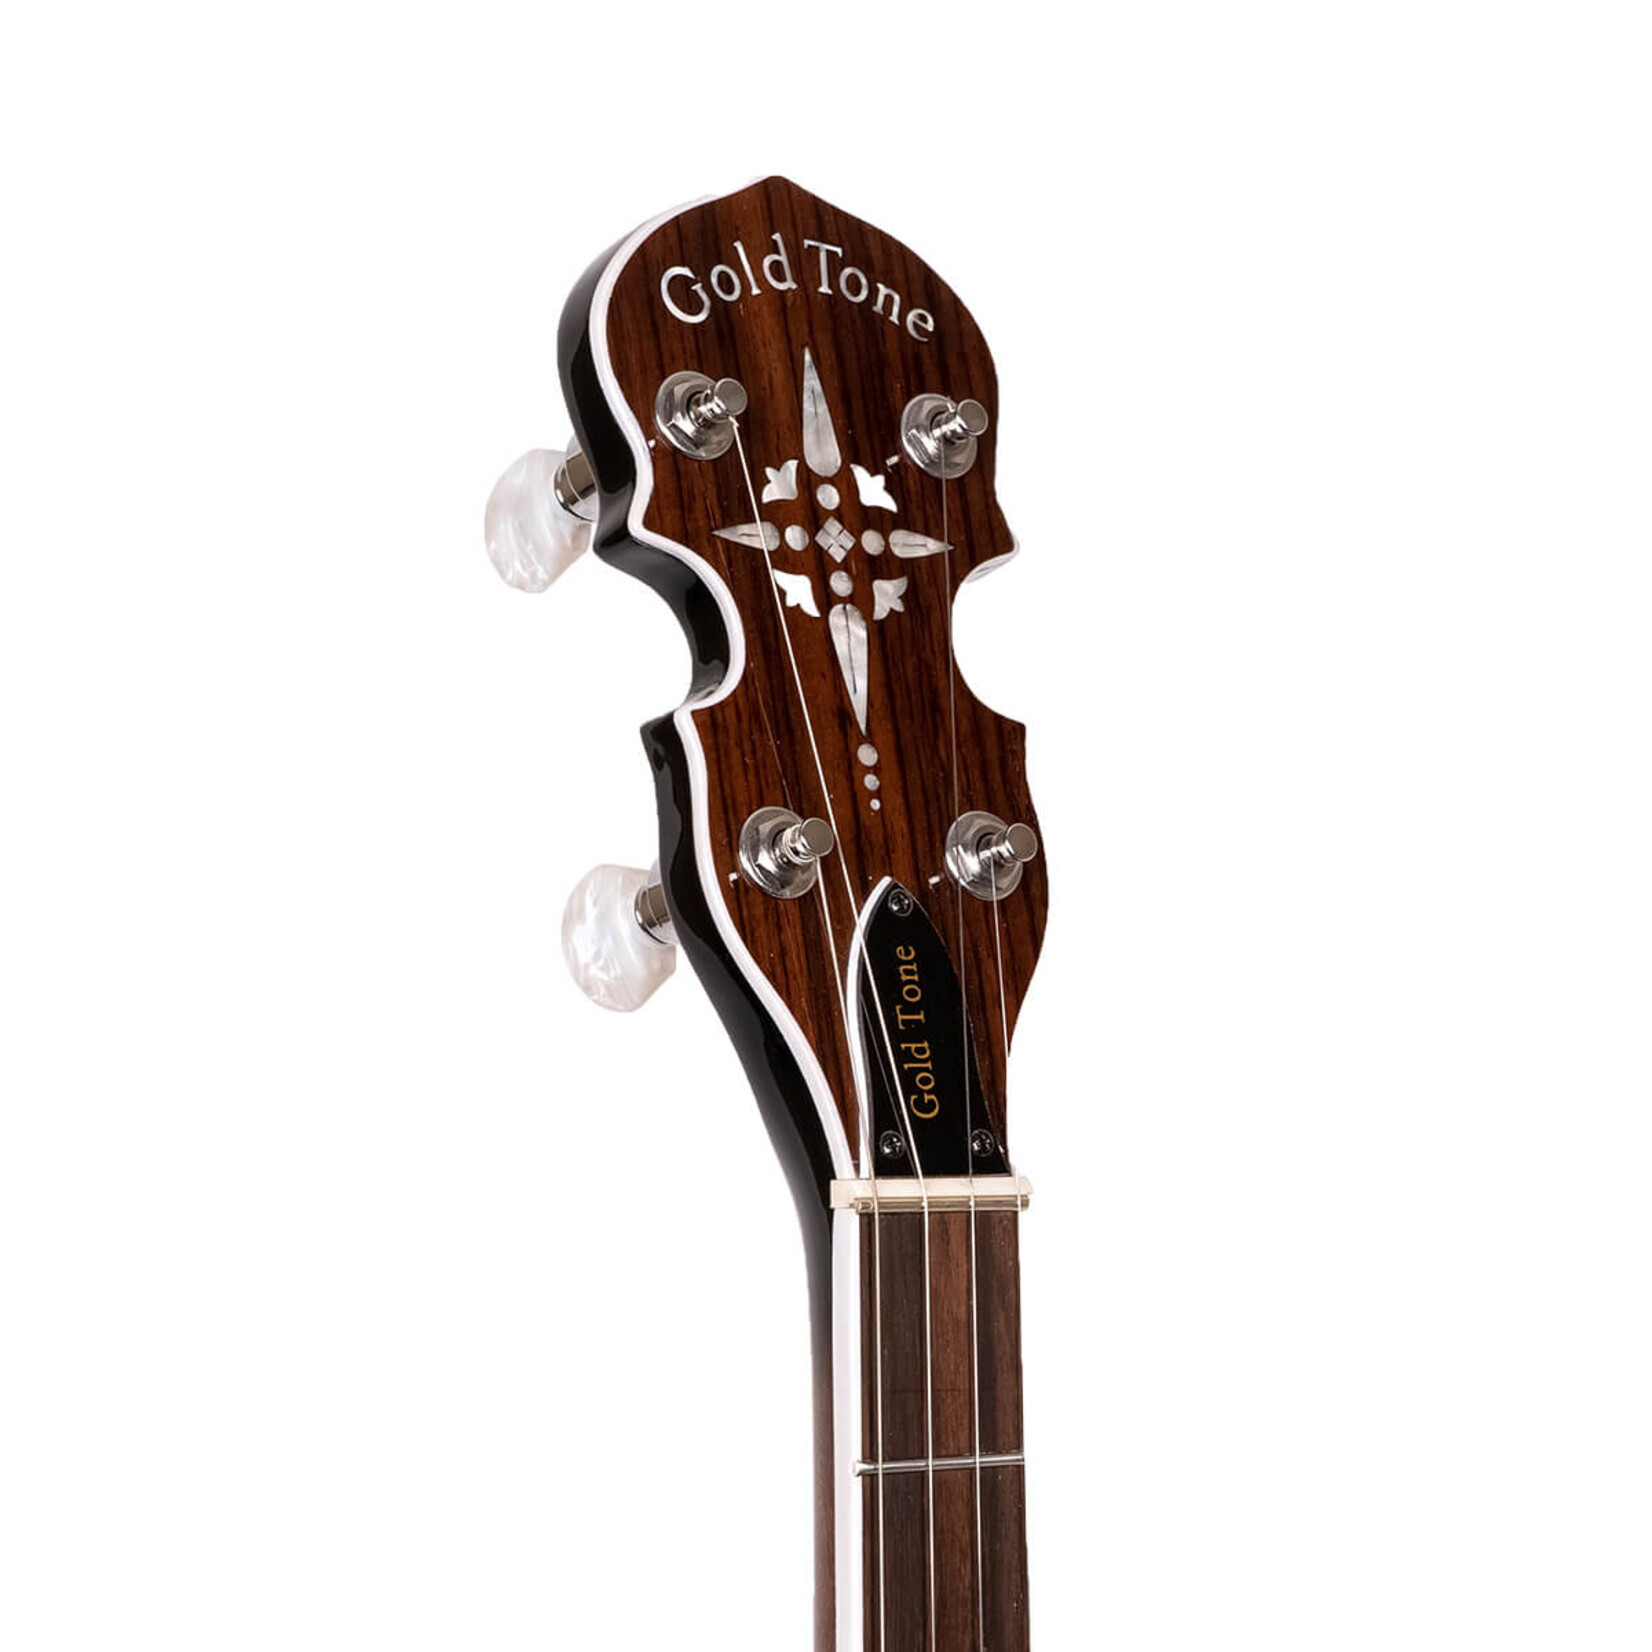 Gold Tone BG-150F Bluegrass Banjo W/ Flange and Bag